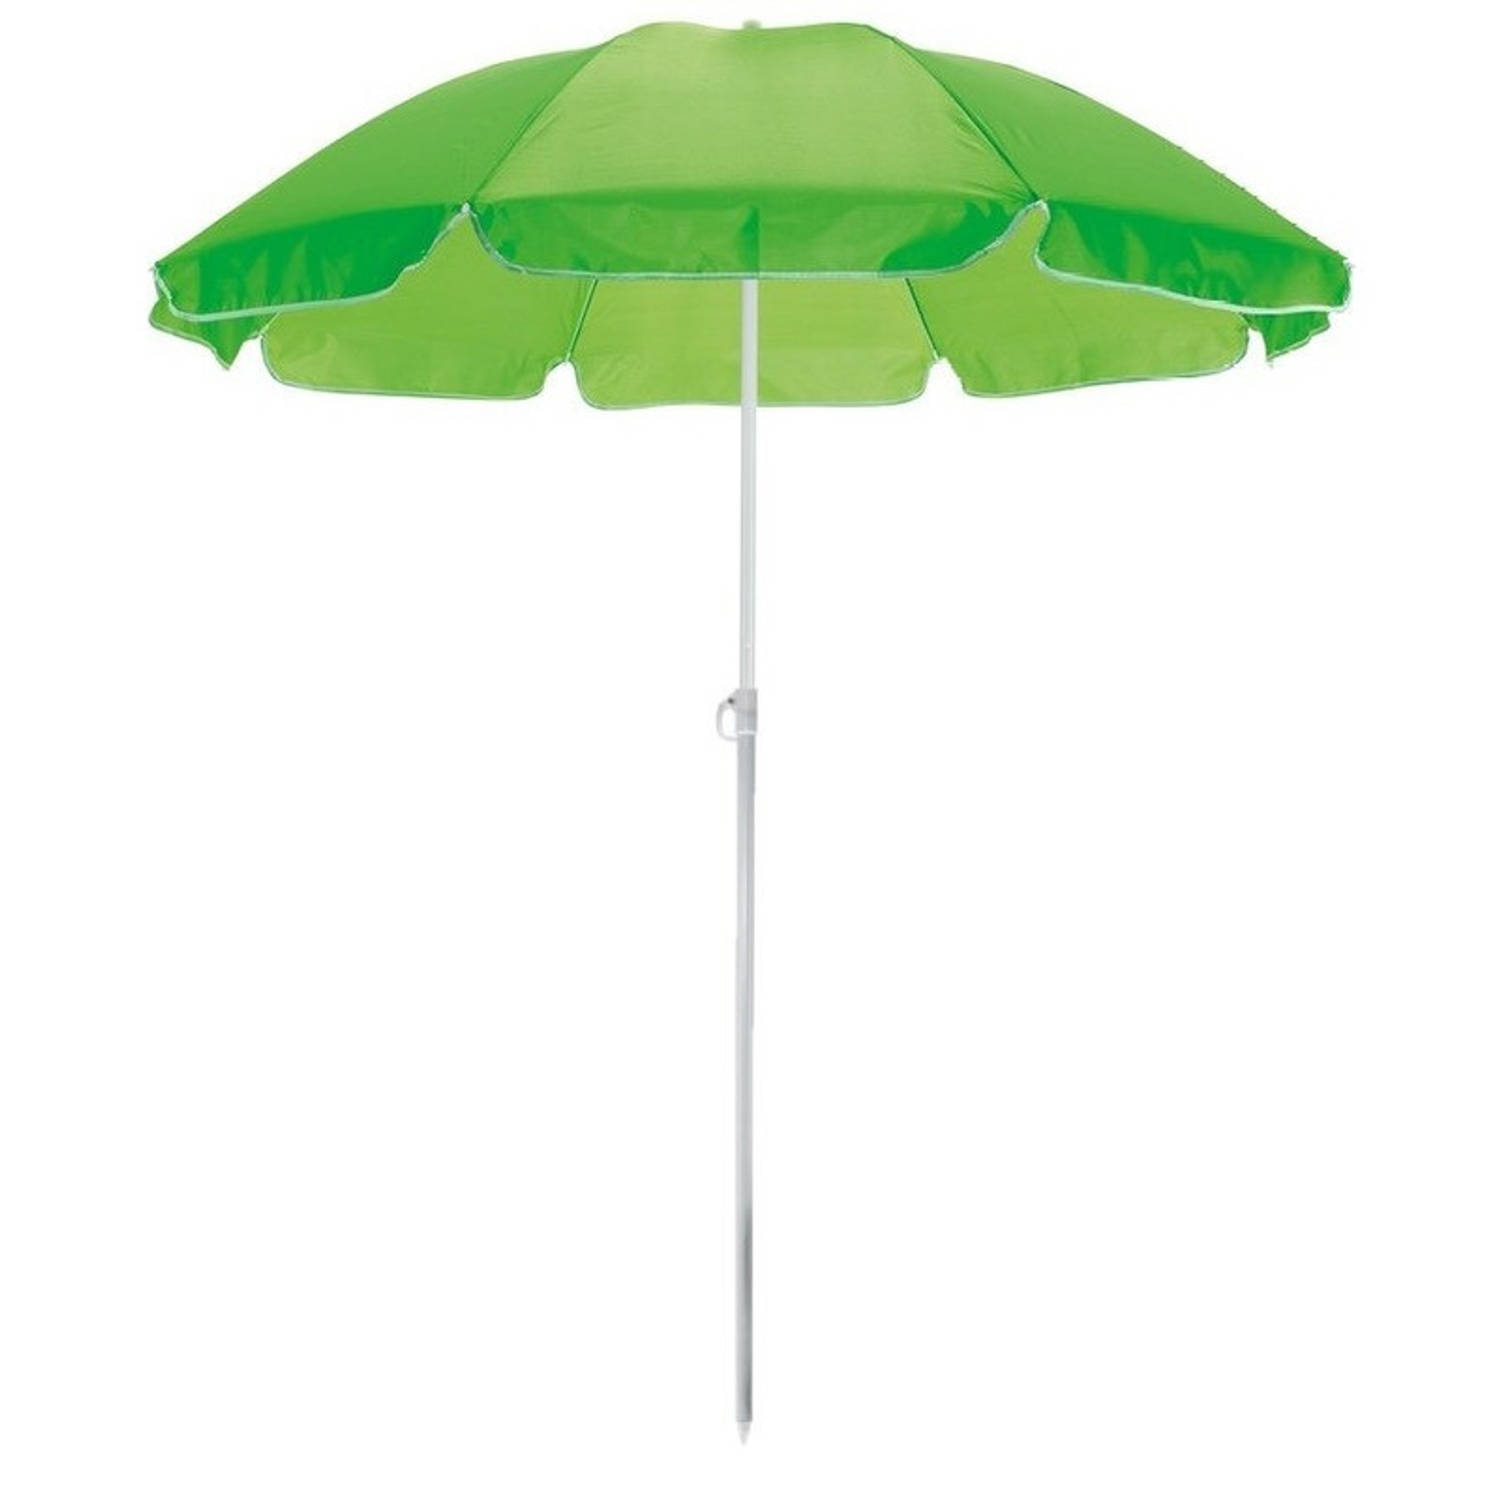 trainer Tegenwerken Staren Groene strand parasol van polyester 145 cm - Parasols | Blokker